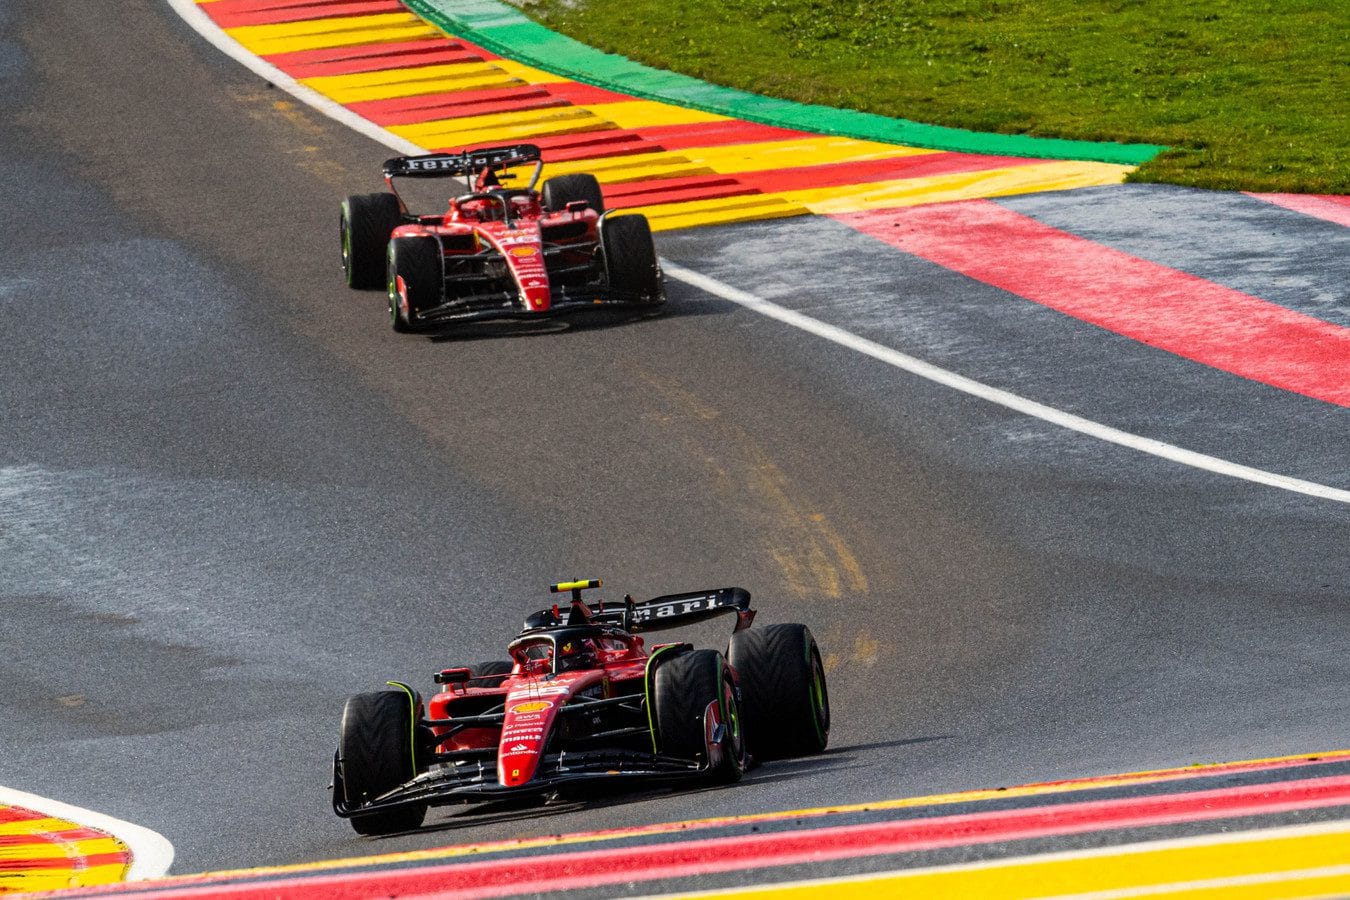 Carlos Sainz - Charles Leclerc Scuderia Ferrari